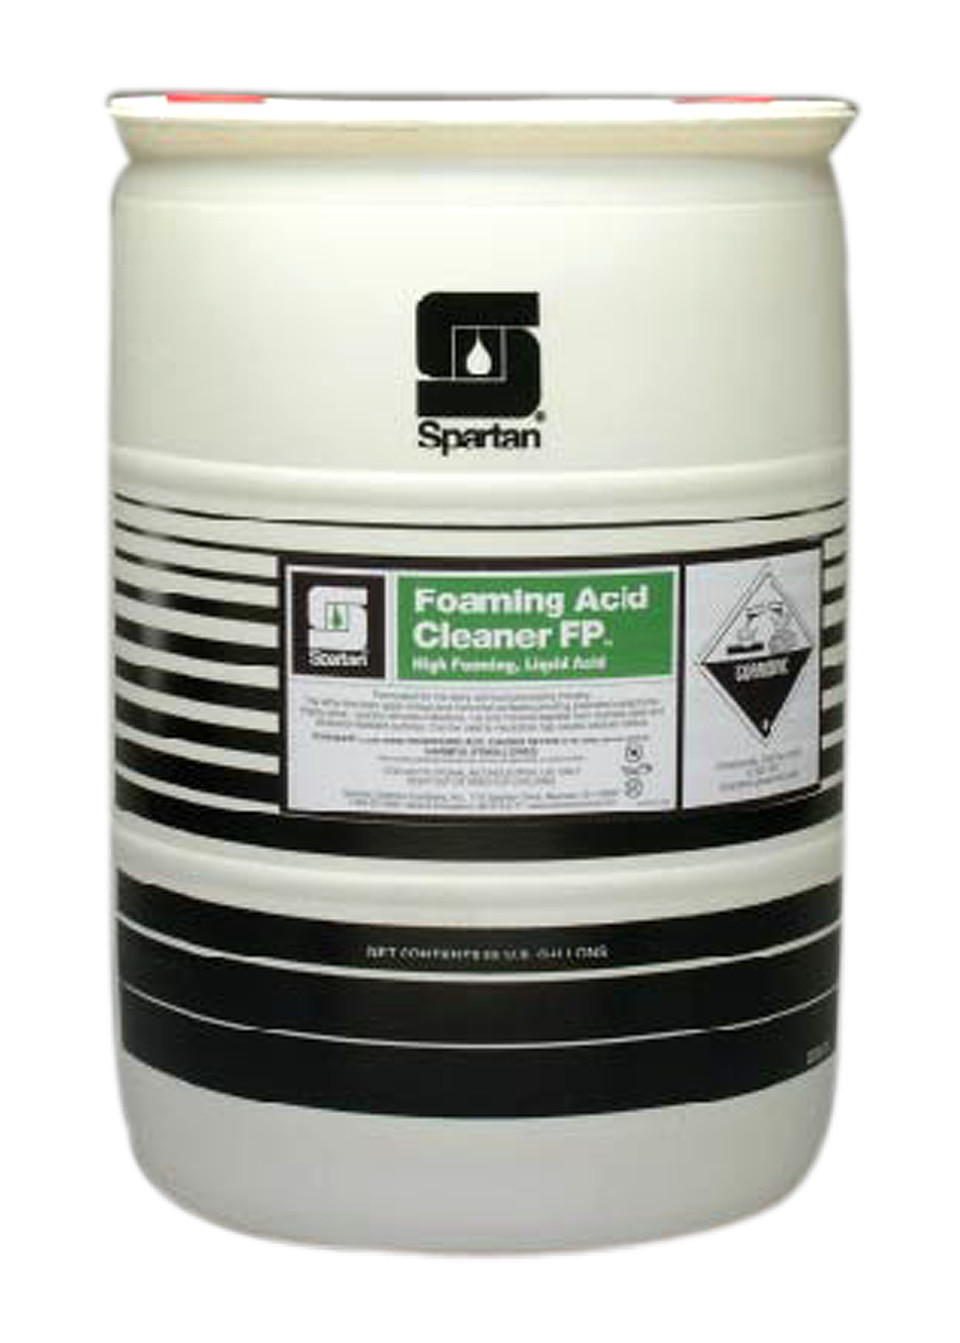 Spartan Chemical Company Foaming Acid Cleaner FP, 55 GAL DRUM